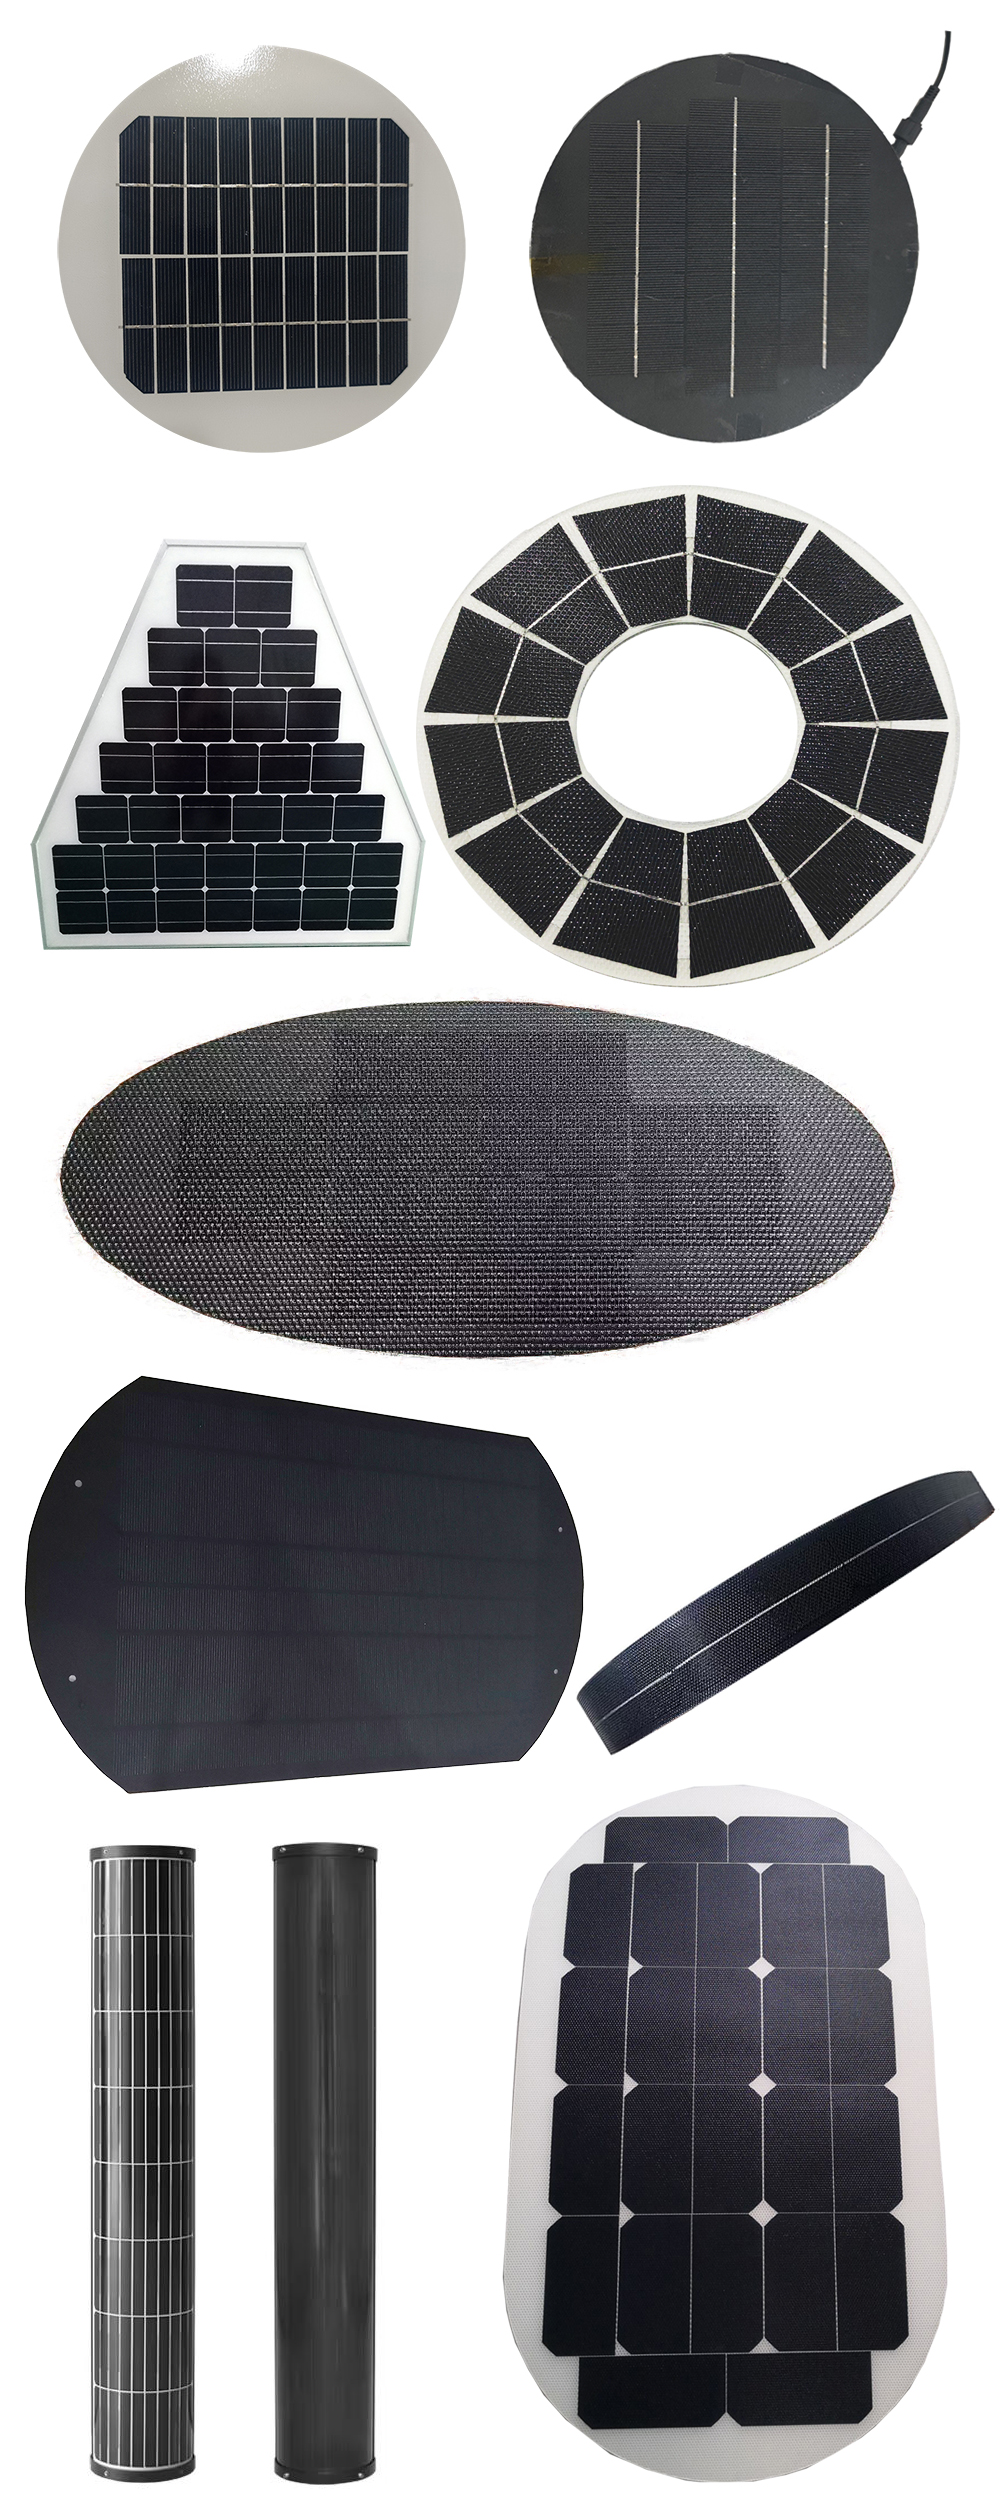 oval shape solar panel example